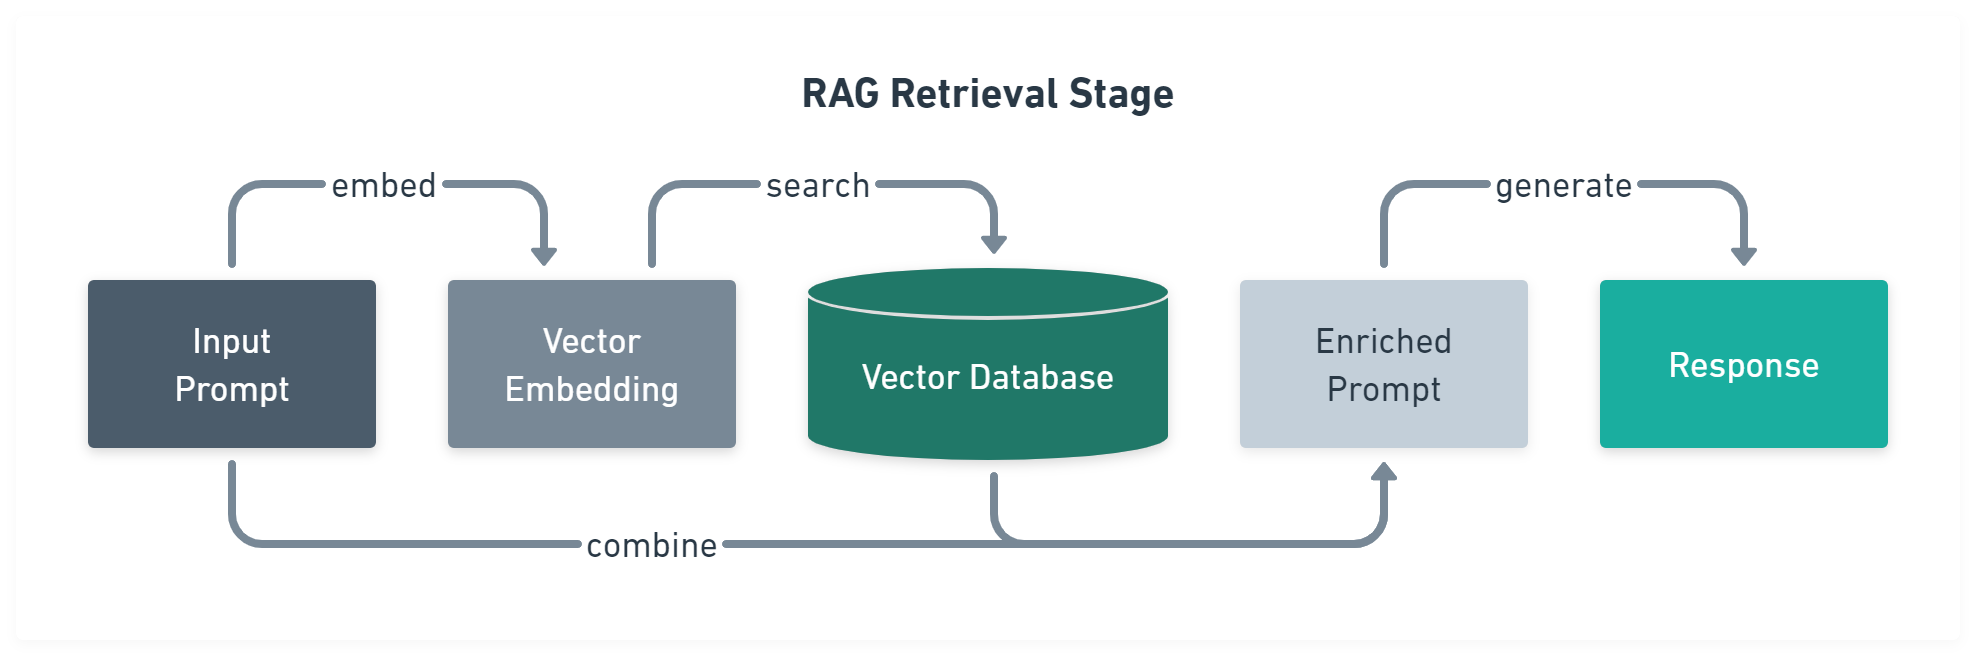 Figure 2: Rag retrieval stage